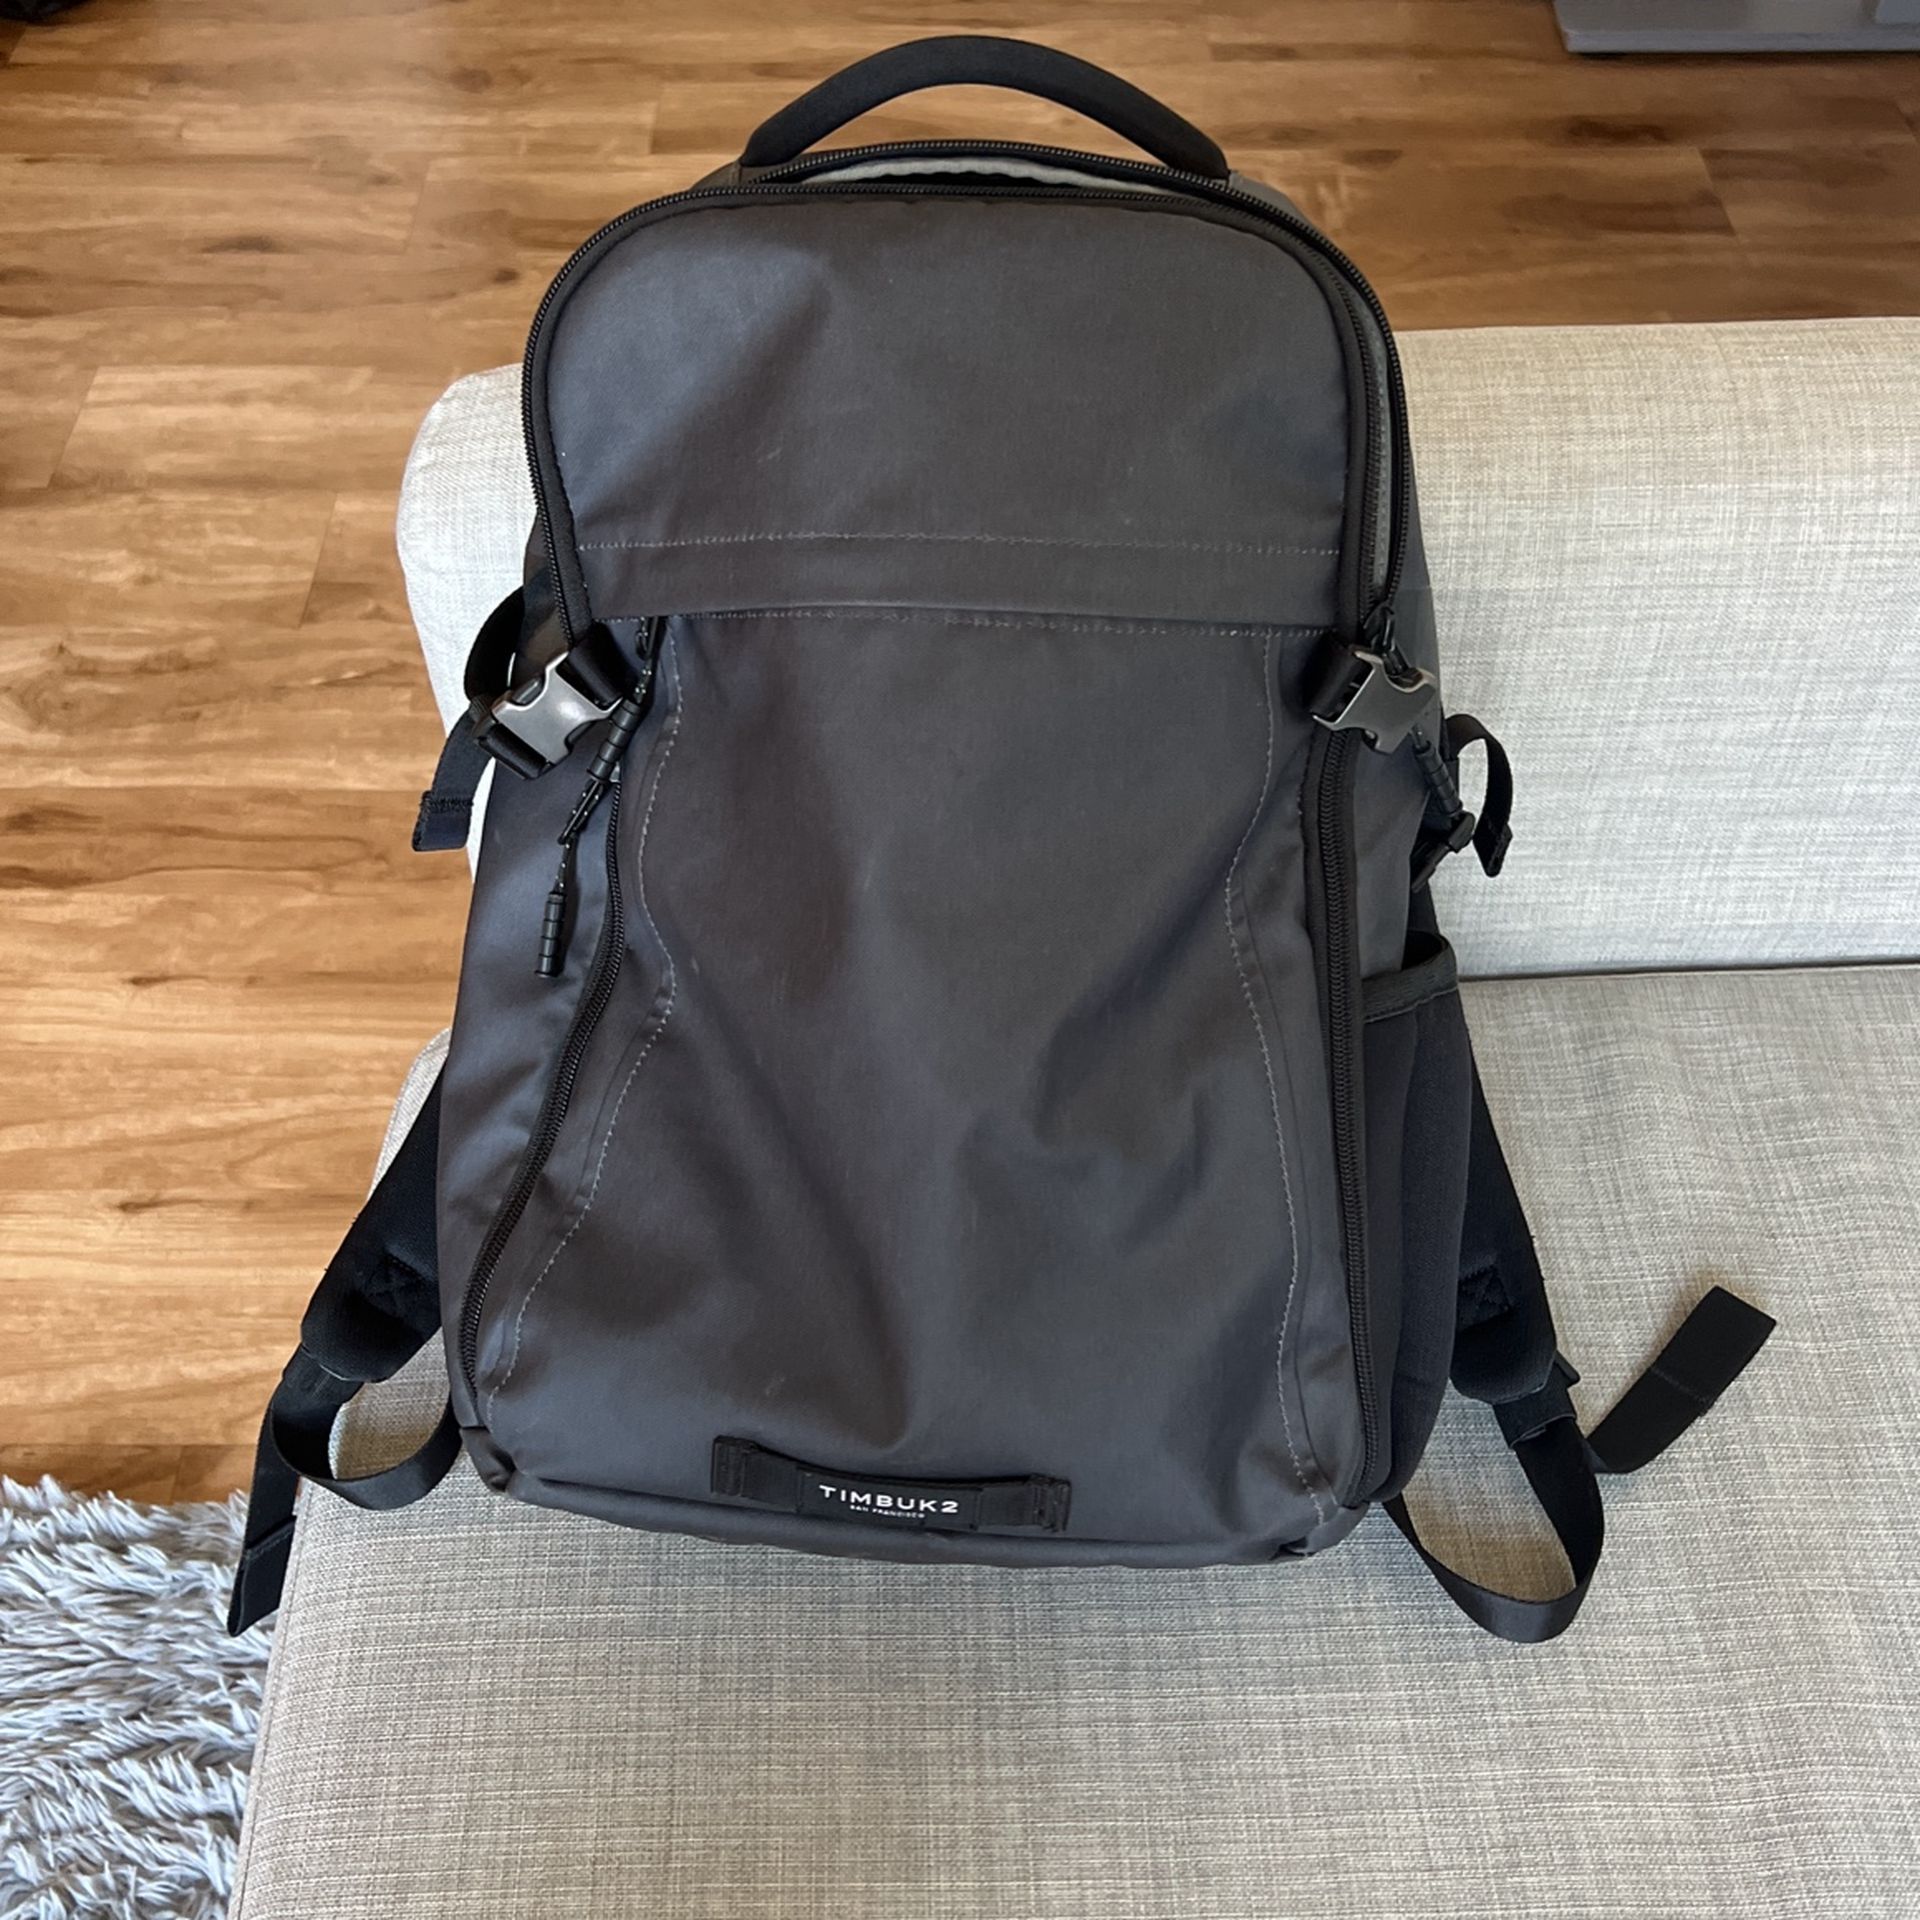 Timbuk2 Laptop Traveling Backpack